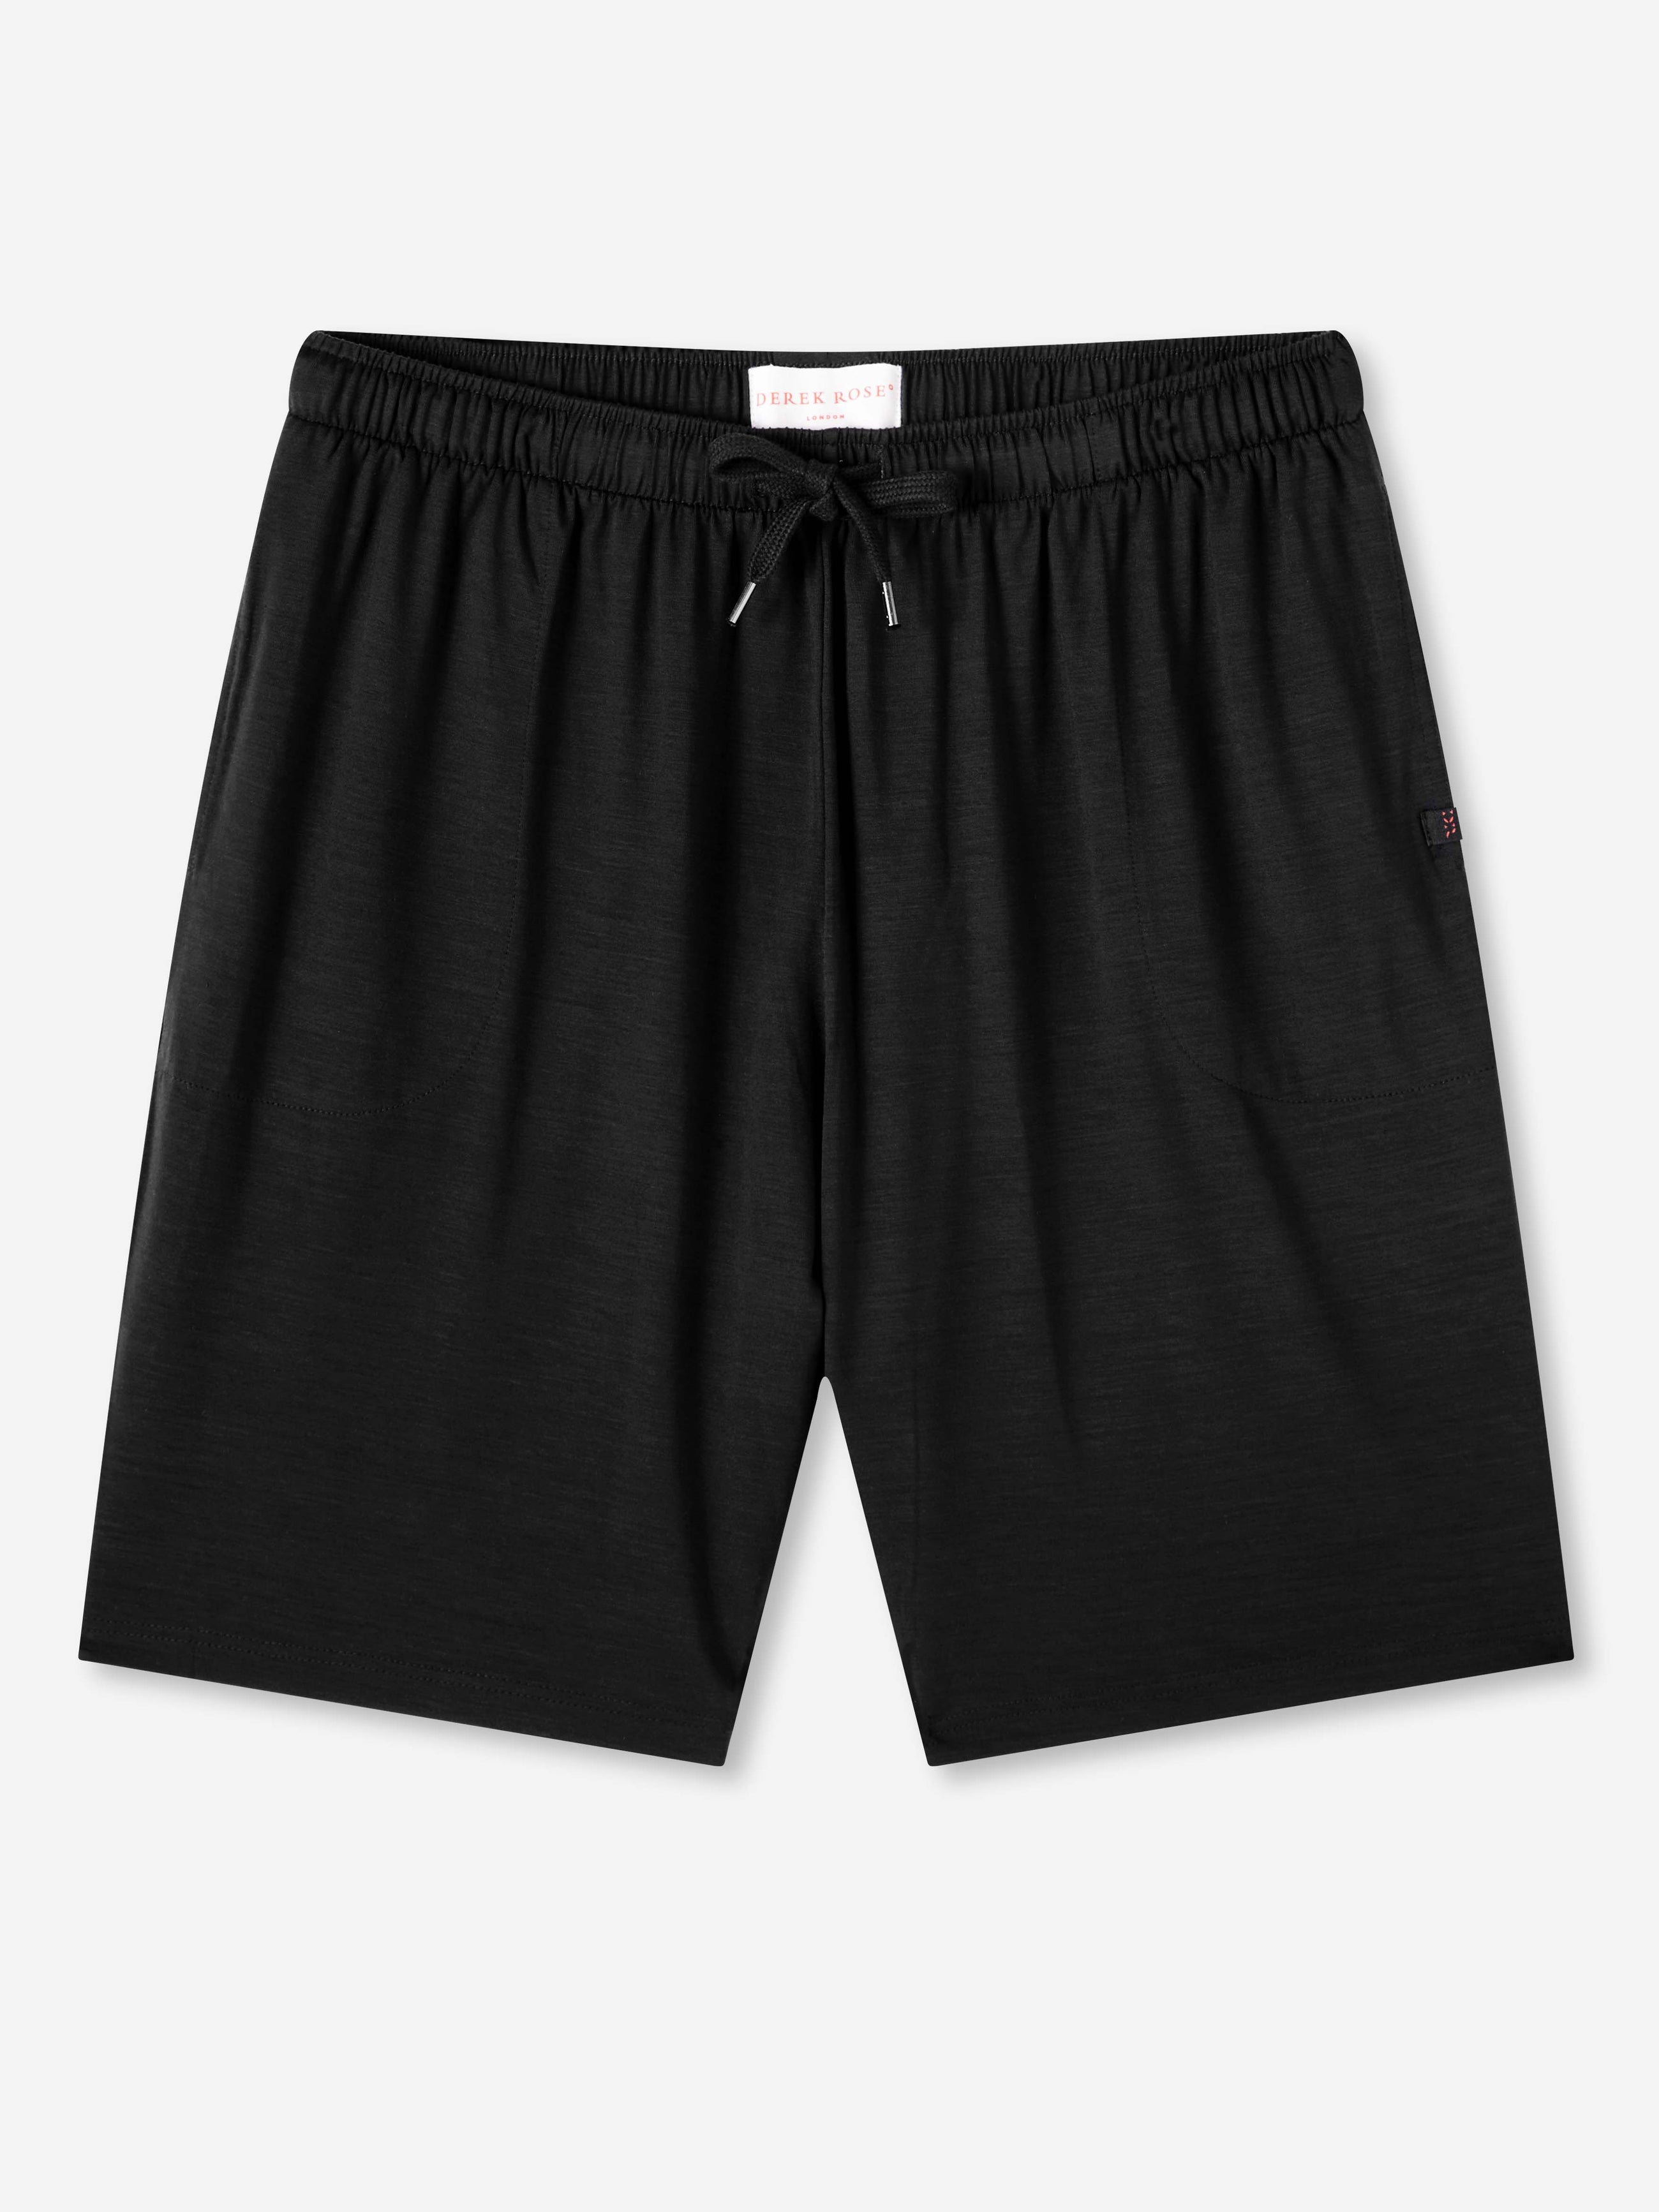 men underwear, body, short sleeve, micromodal Color Black Size Small